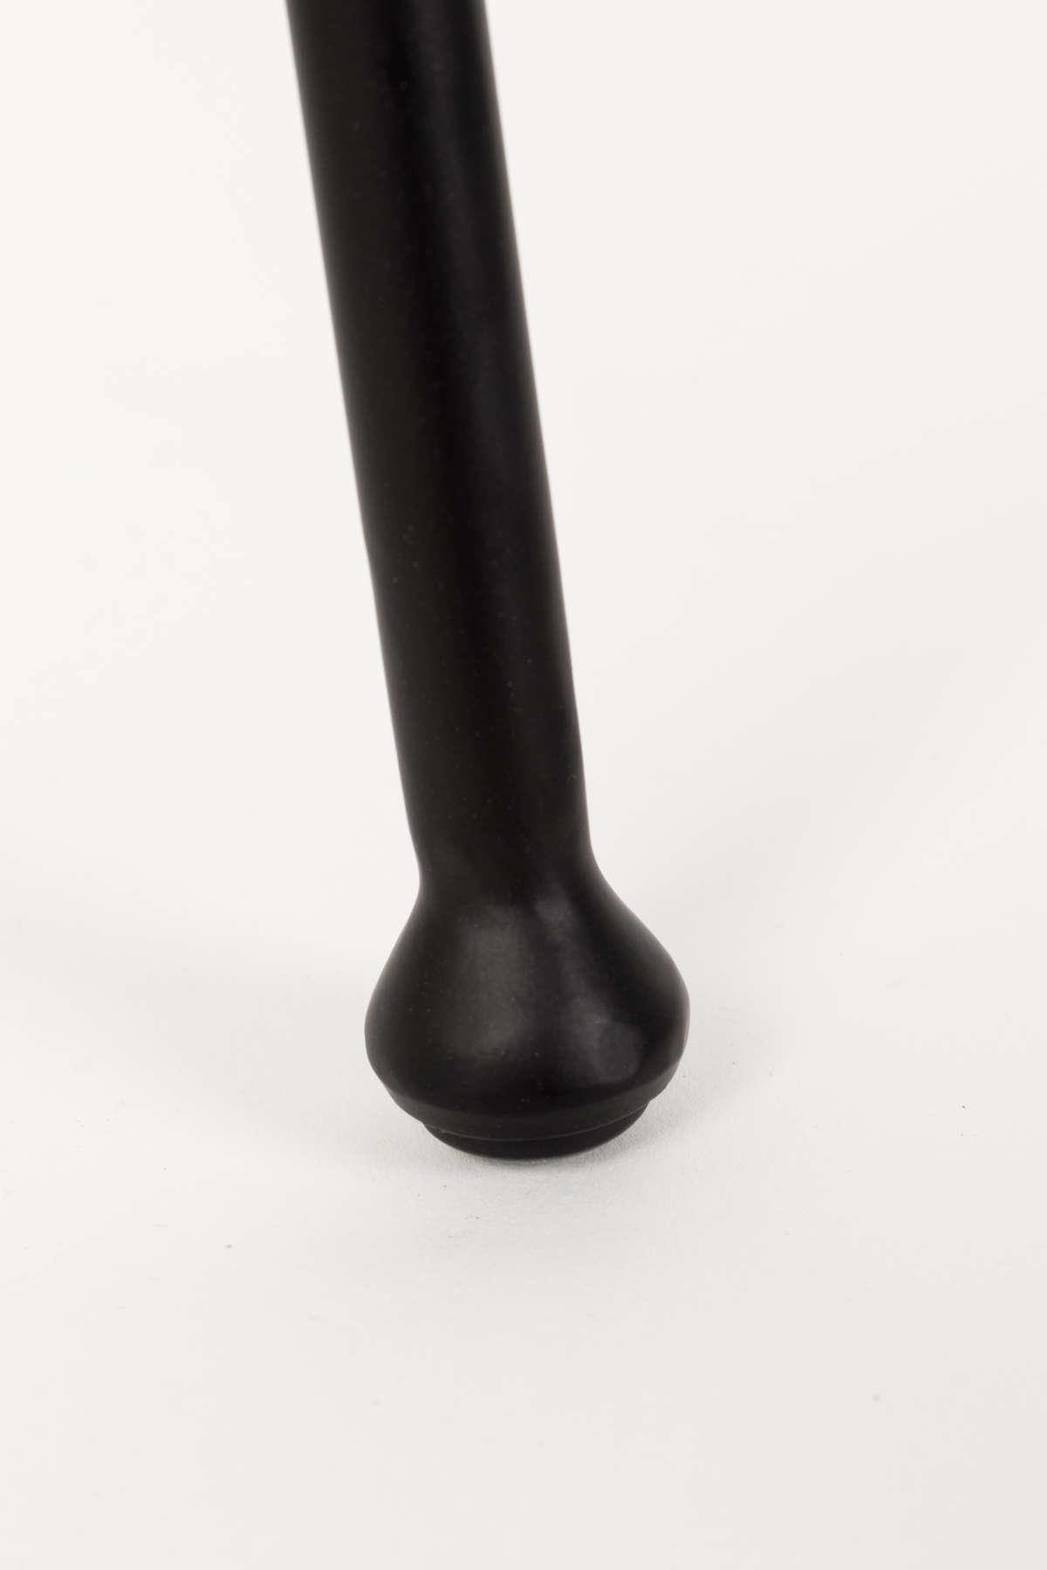 Zuiver :: Hoker/stołek barowy Feston czarny wys. 88,5 cm